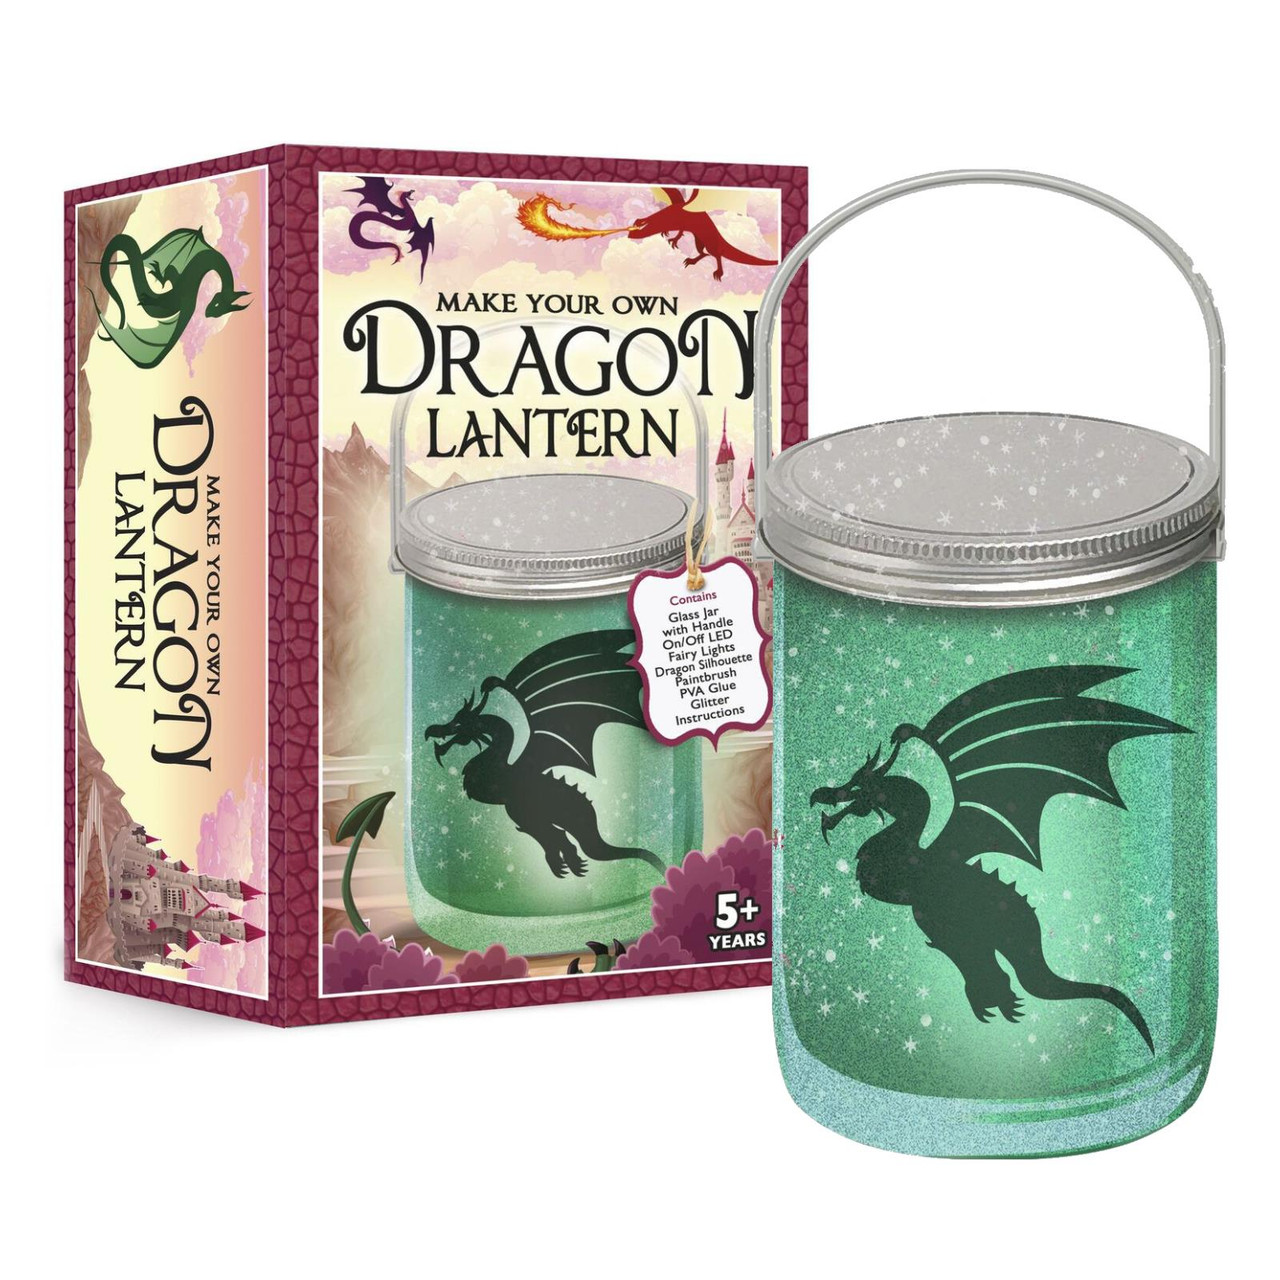 Make Your Own Dragon Lantern Activity Kit